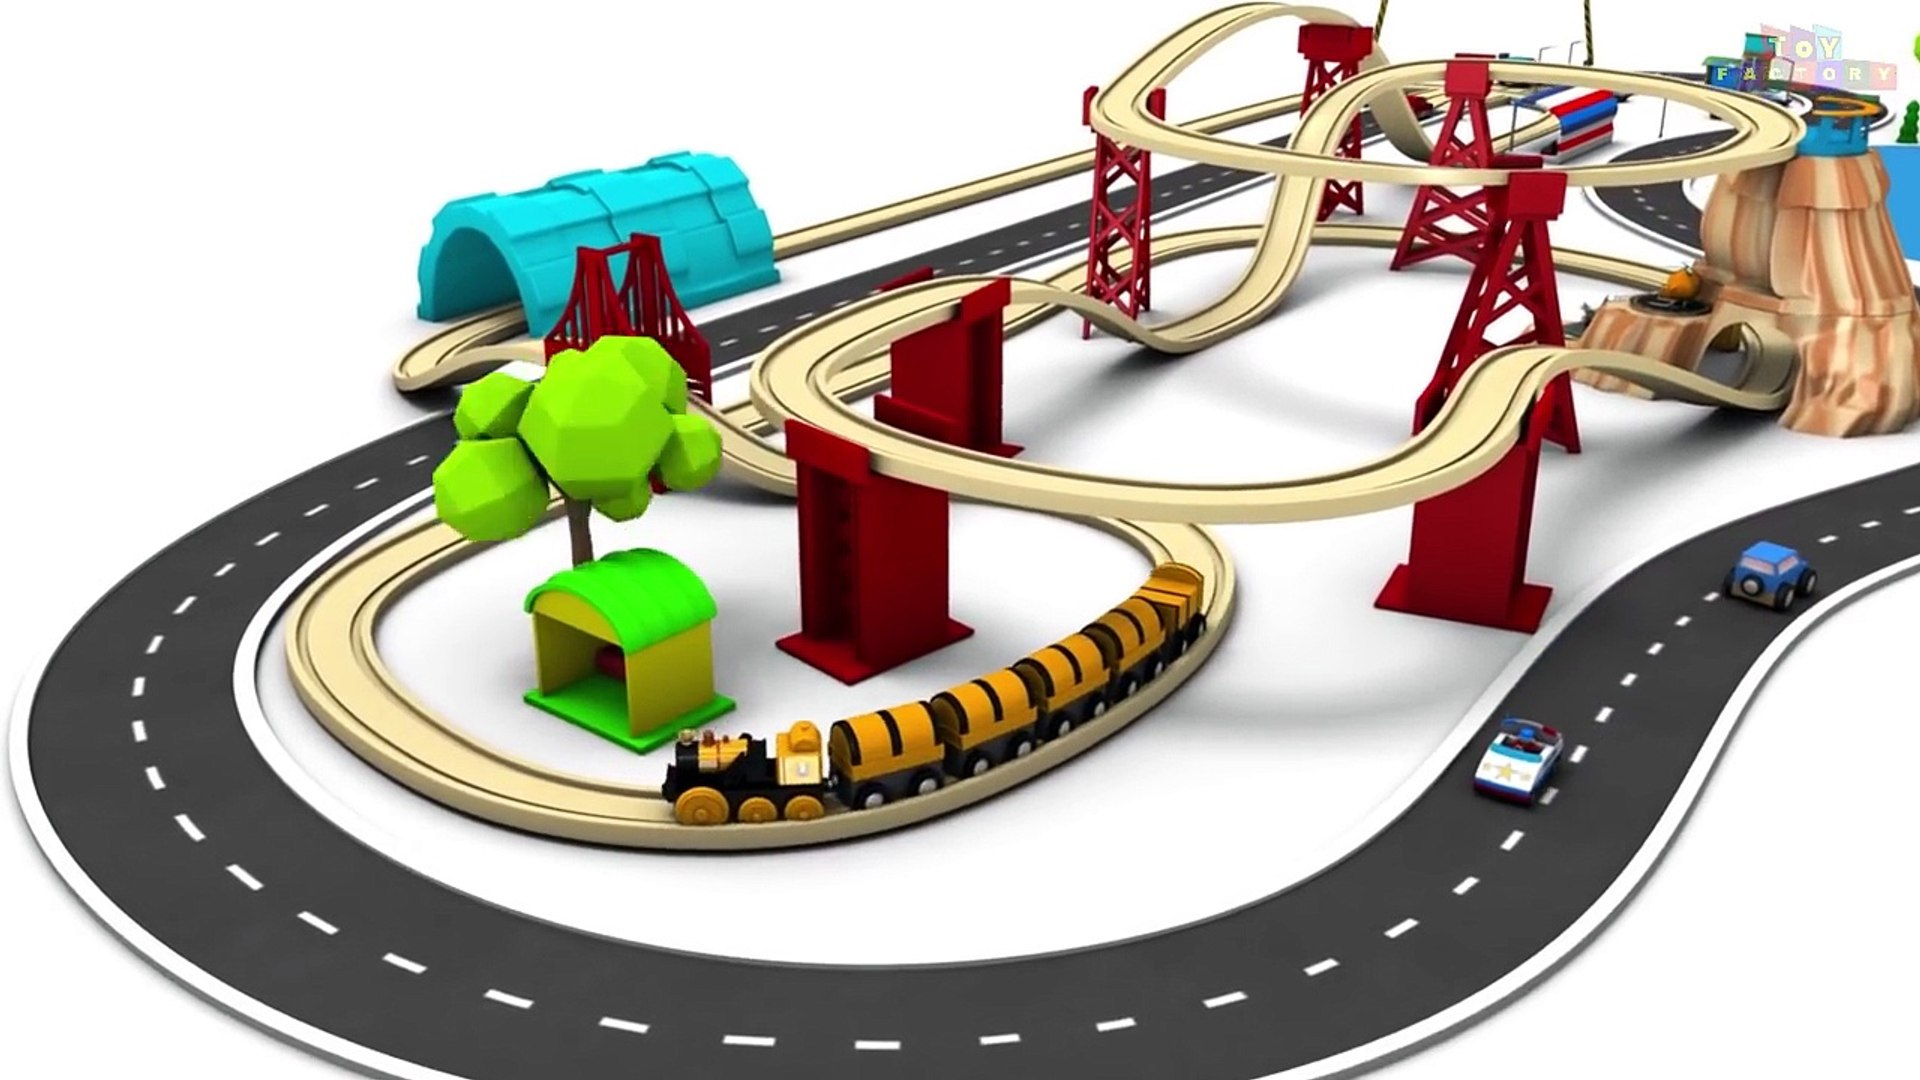 choo choo train - trains for children - car cartoon for kids - train for  kids - train cartoon - video Dailymotion